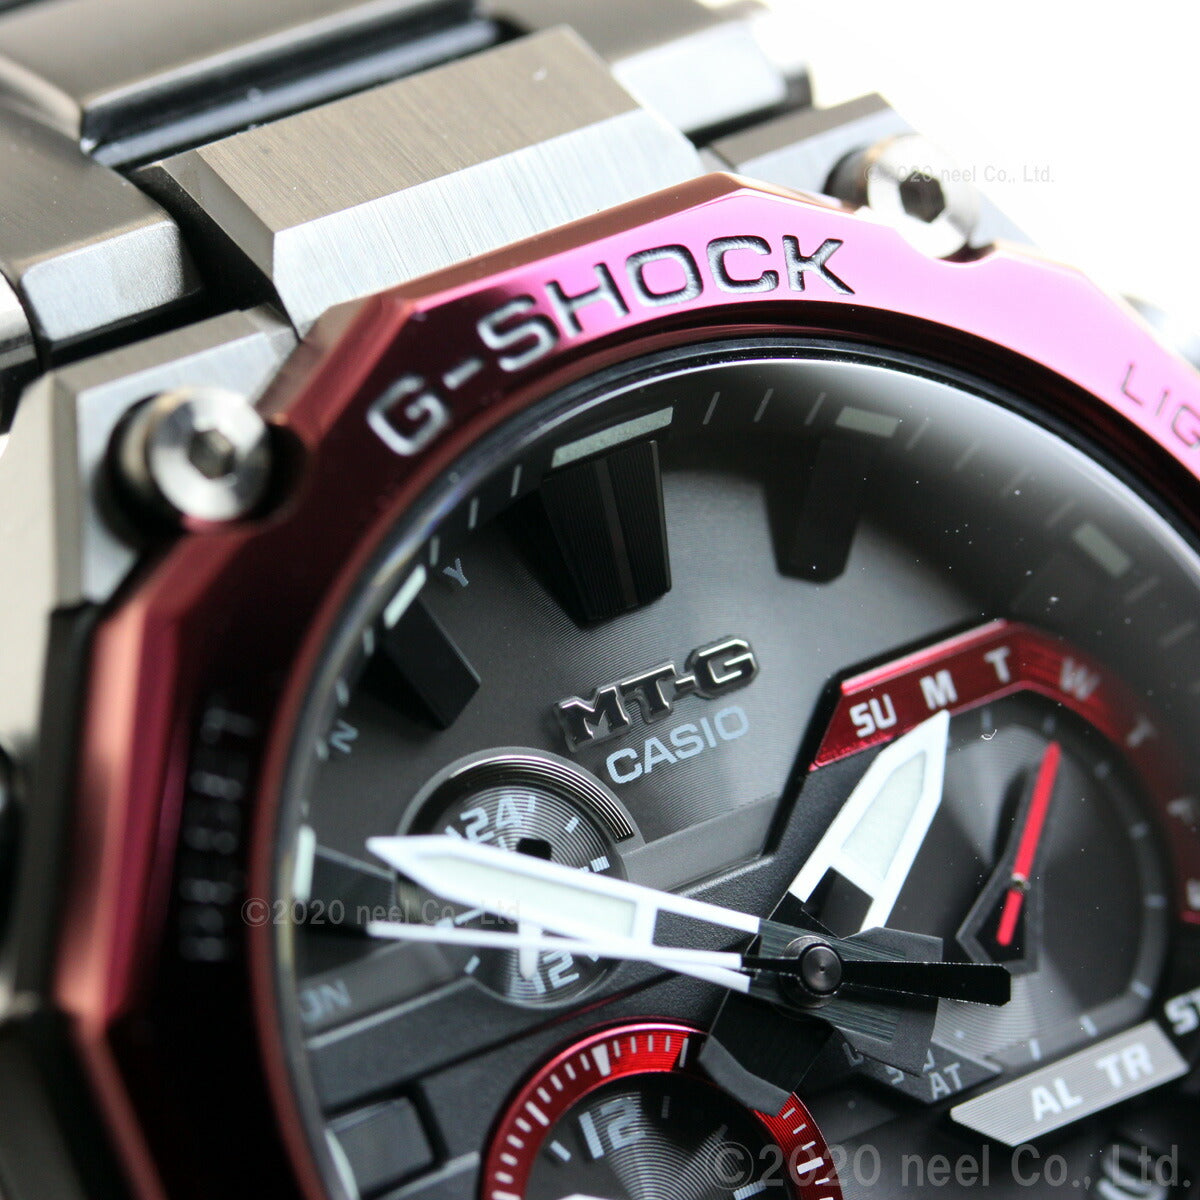 MT-G G-SHOCK 電波 ソーラー 電波時計 カシオ Gショック CASIO 腕時計 メンズ タフソーラー MTG-B2000BD-1A4JF